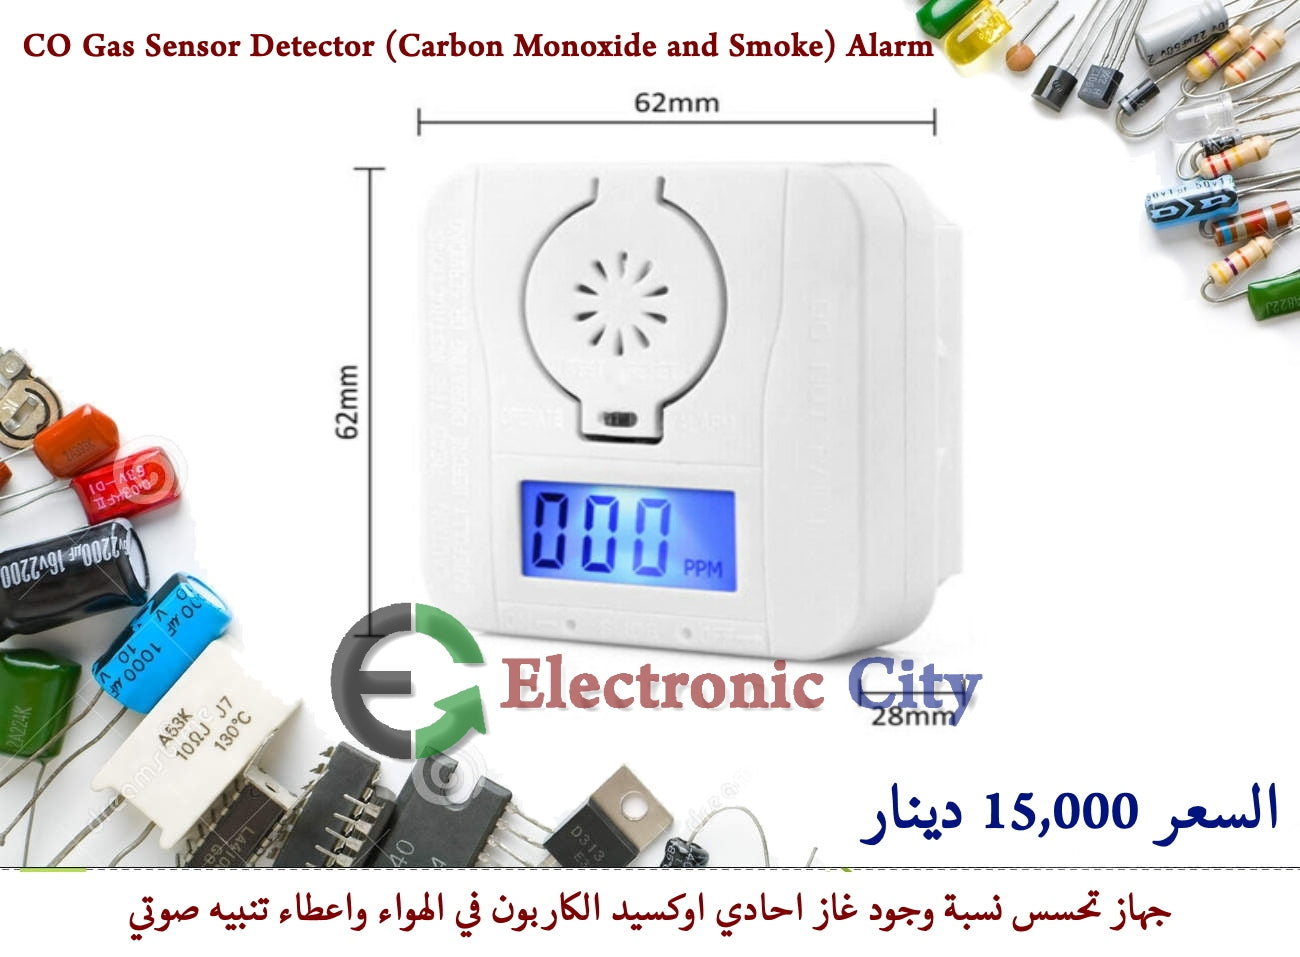 CO Gas Sensor Detector (Carbon Monoxide and Smoke) Alarm #N8. 011258